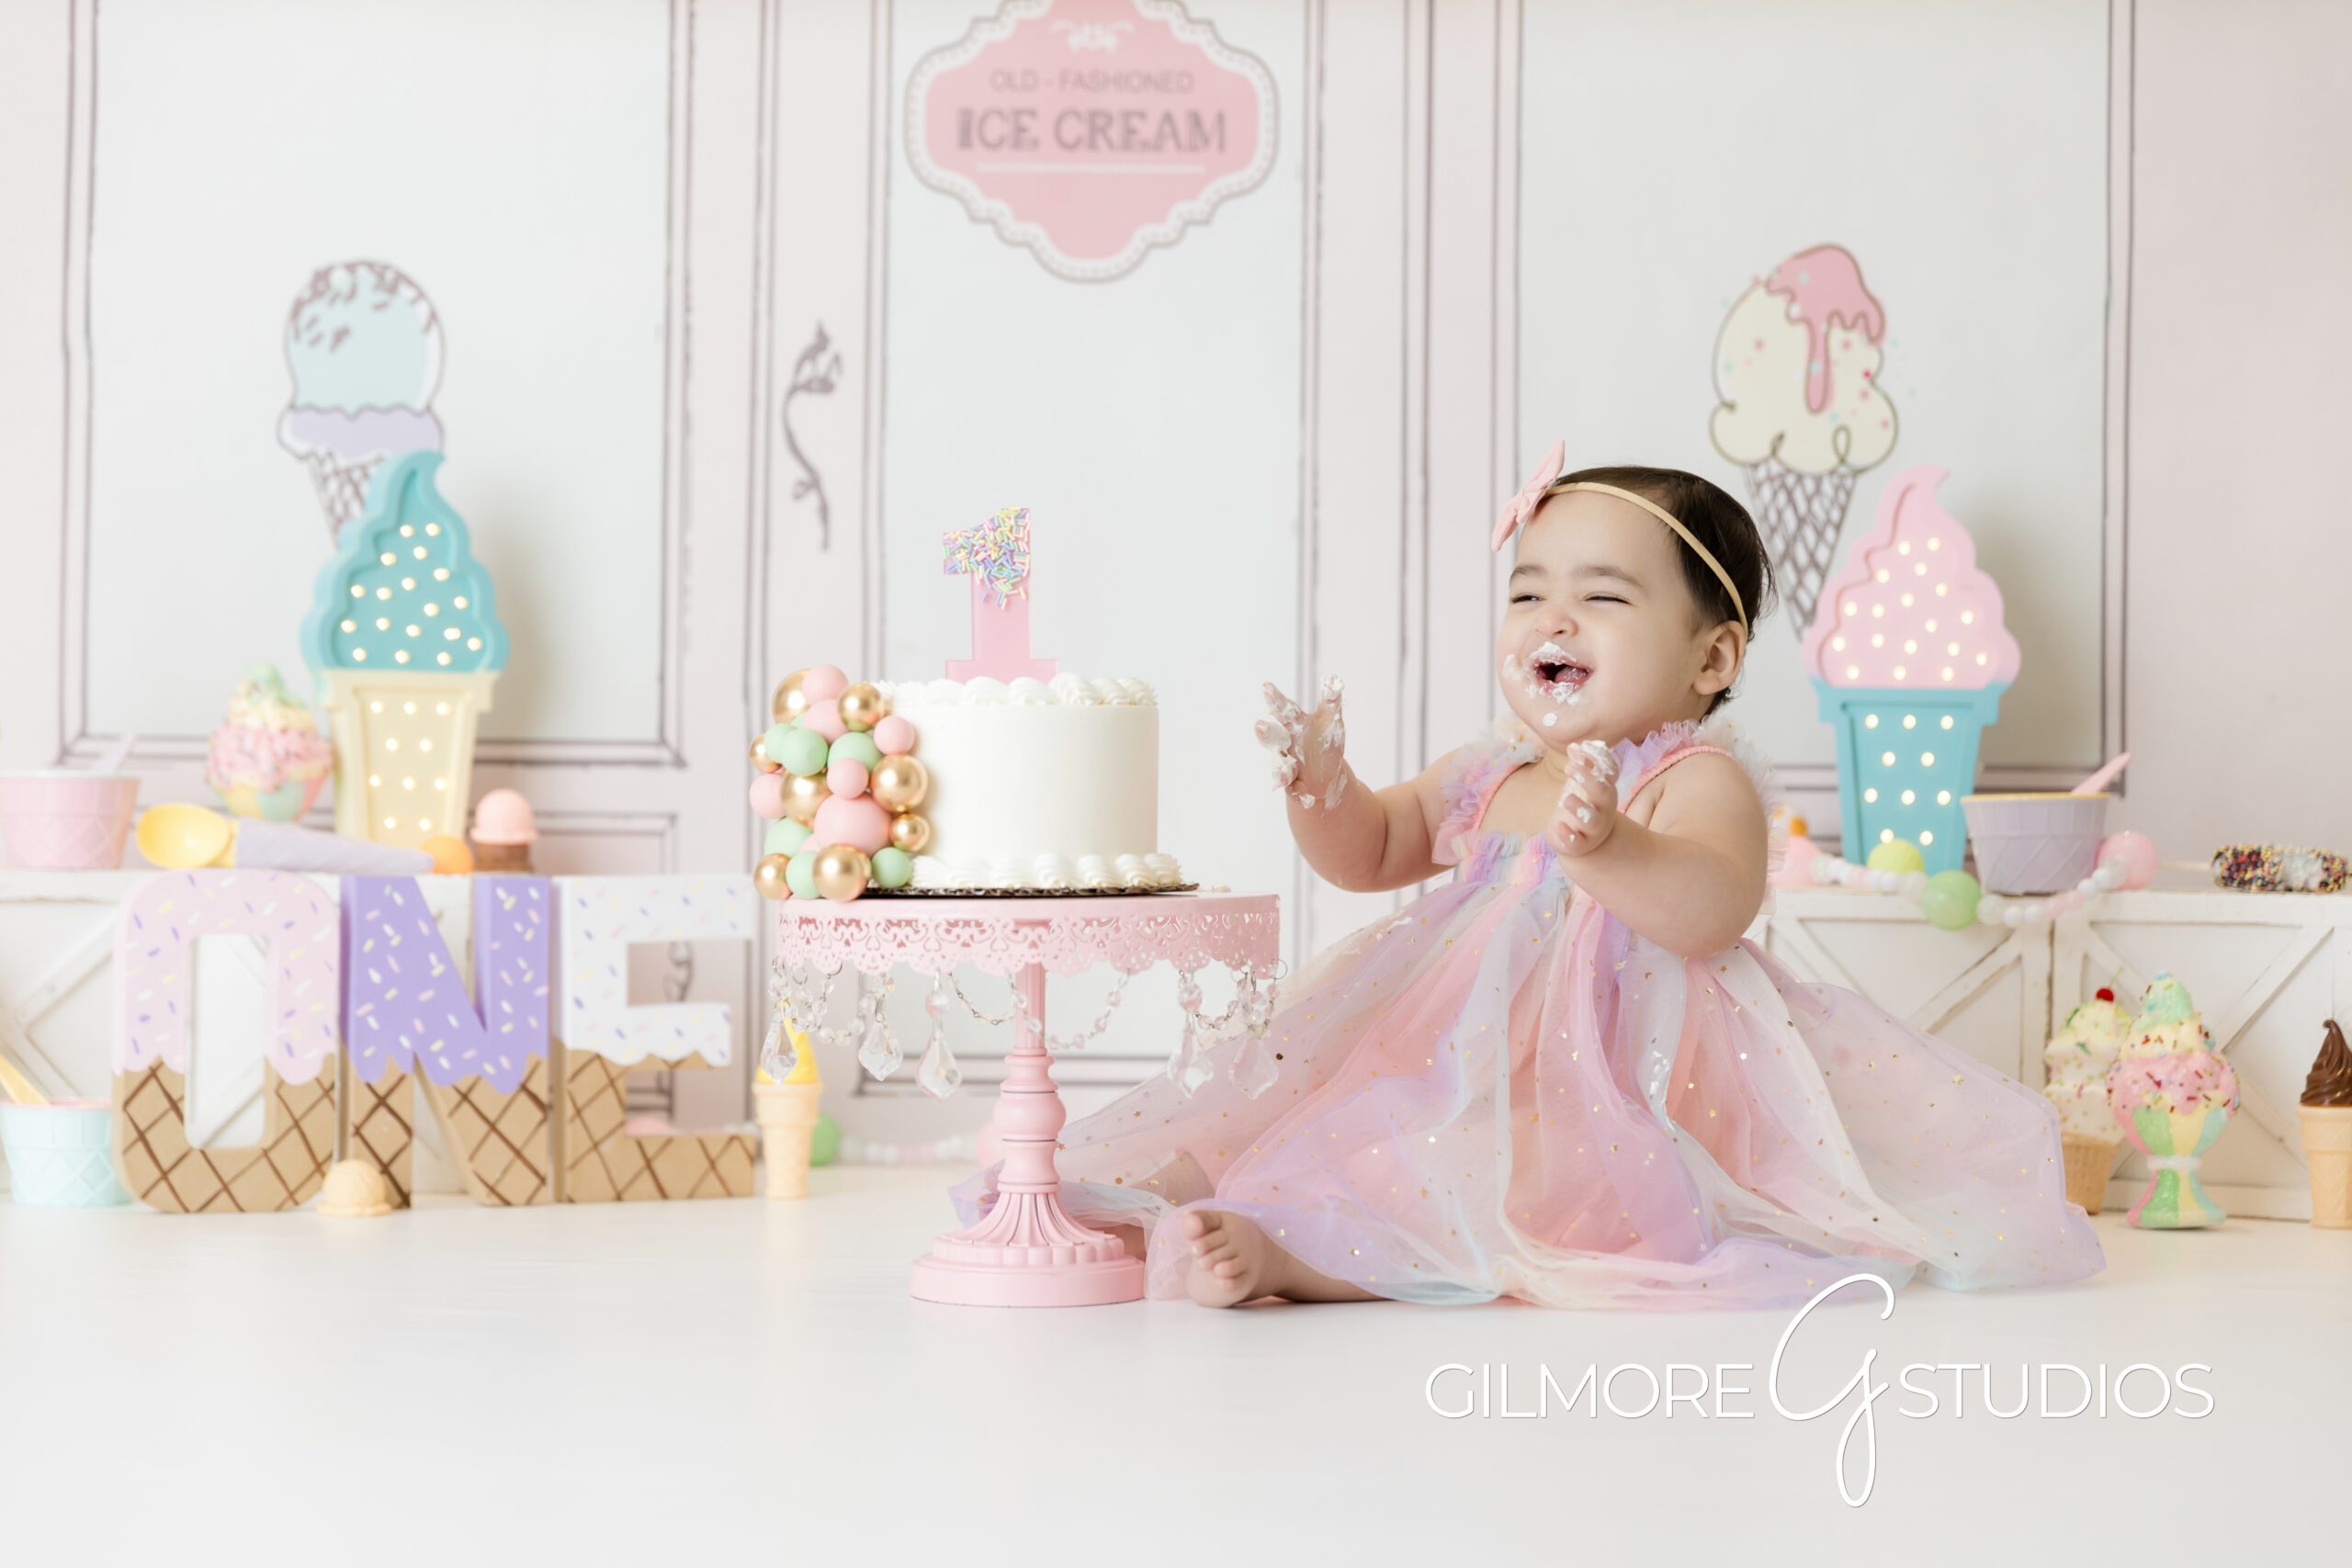 ice cream theme cake Smash, little girl, little girl laughing, pink dress, white cake, ice cream parlor, ice cream themed, cake Smash, photography, Gilmore Studios